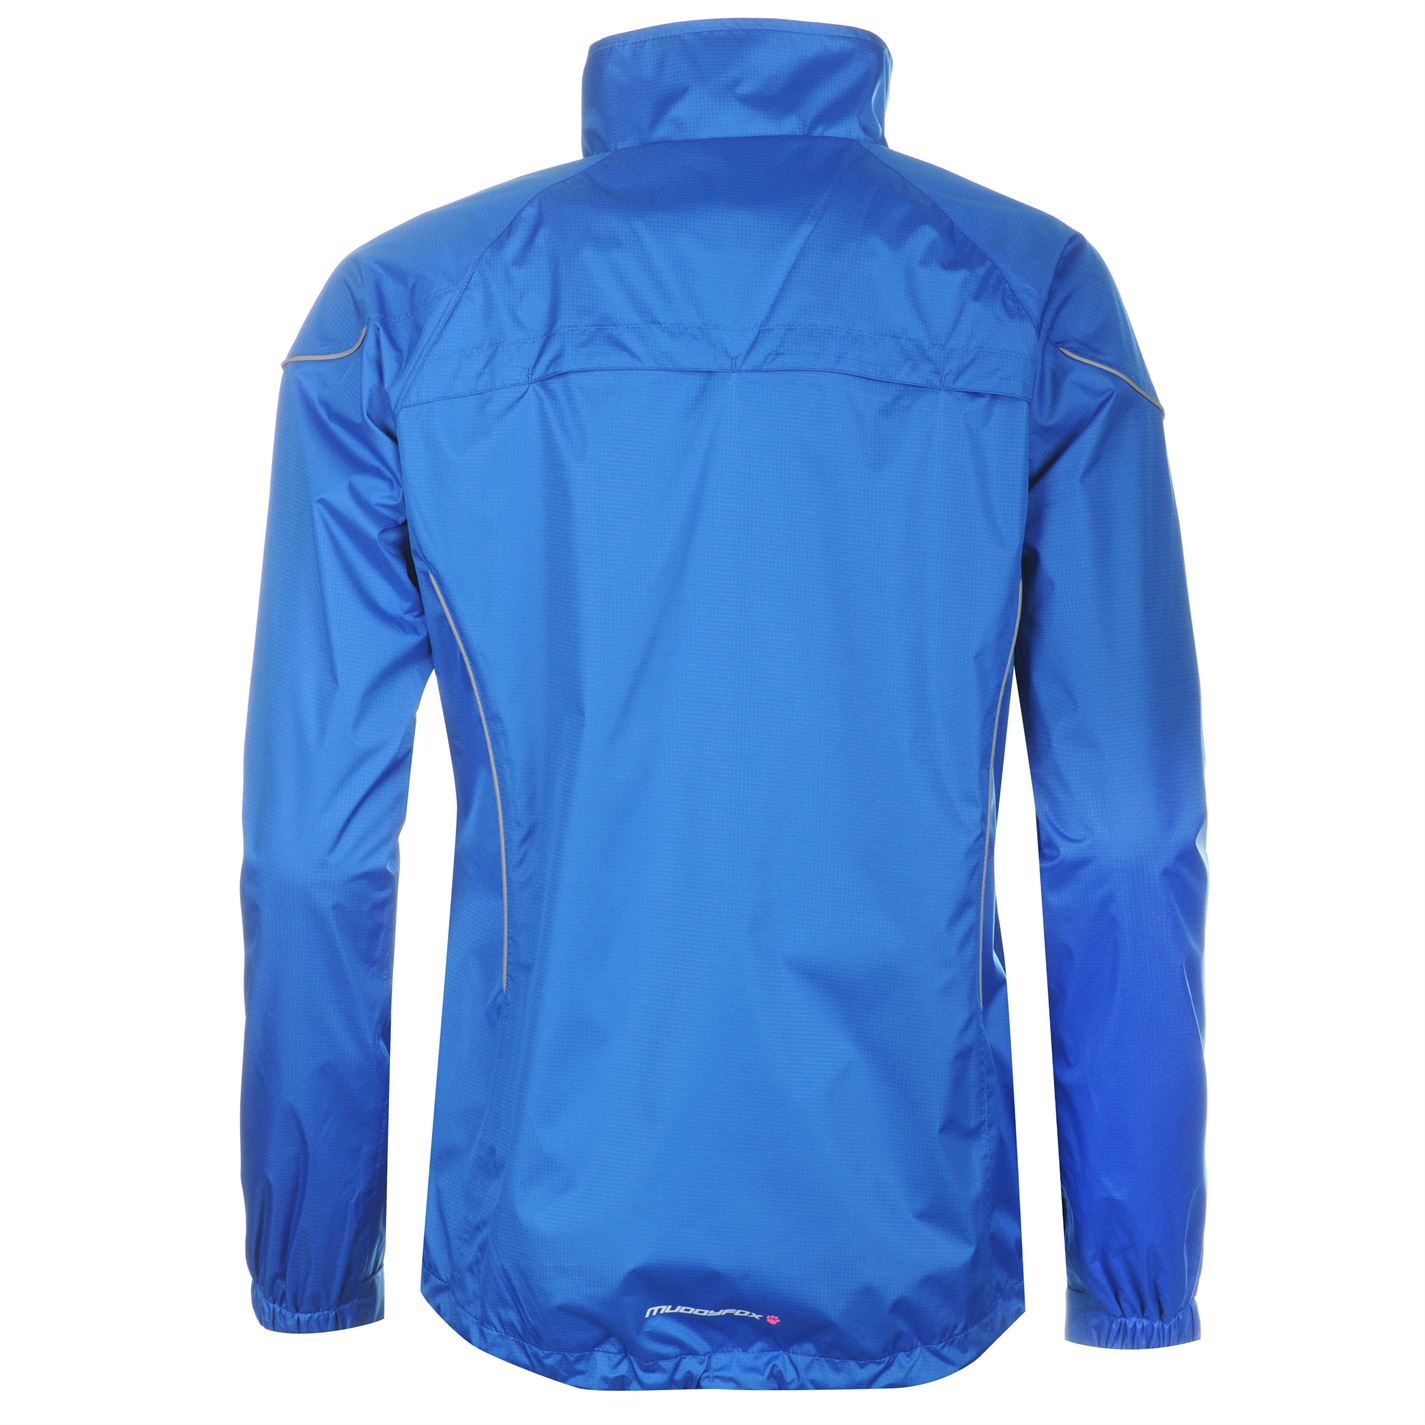 Muddyfox Ladies Womens Cycling Jacket Top Chest Pocket Block Colours | eBay